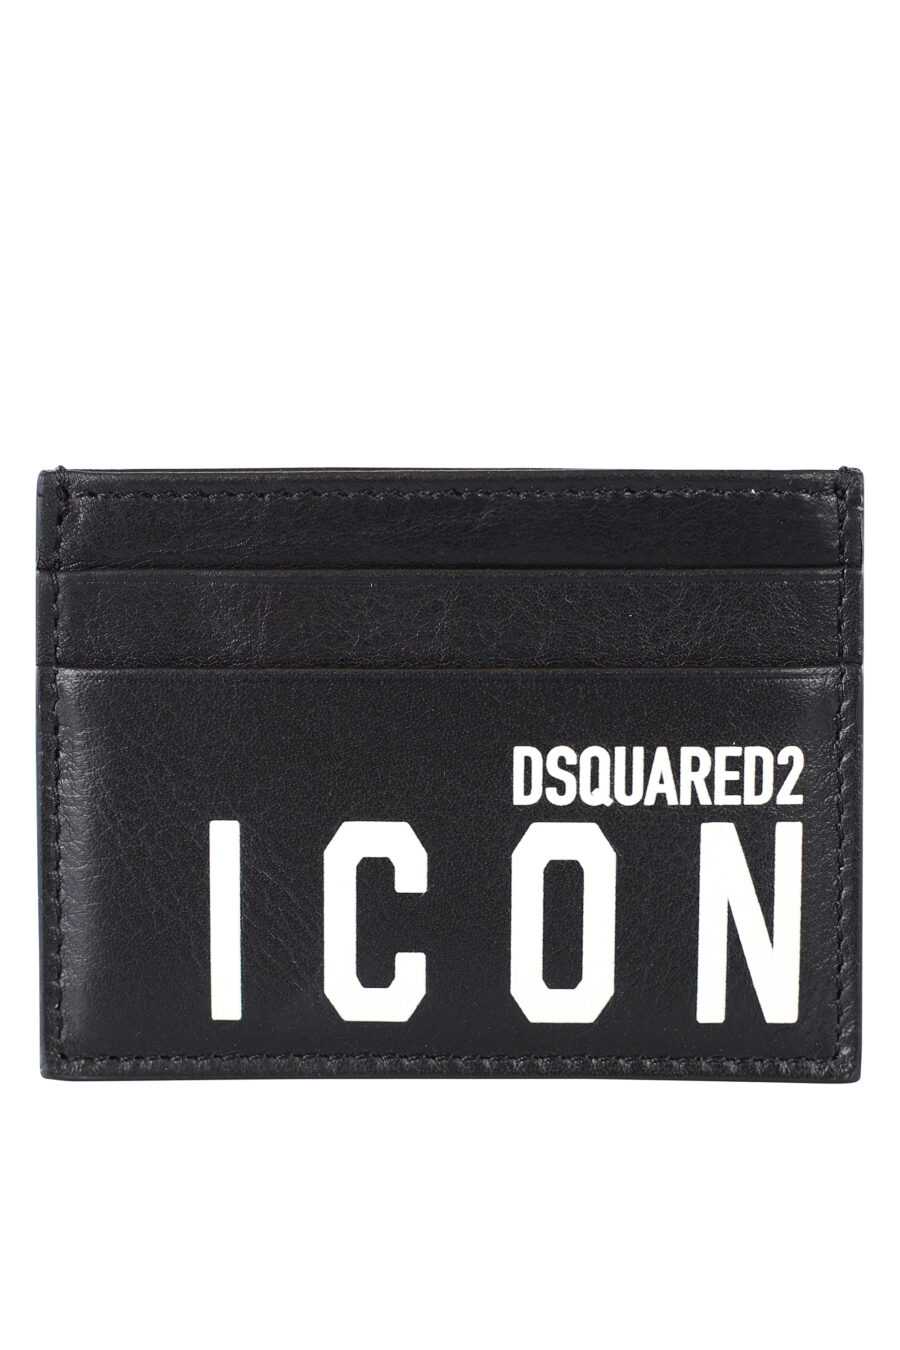 Tarjetero negro con logo "icon" - IMG 7177